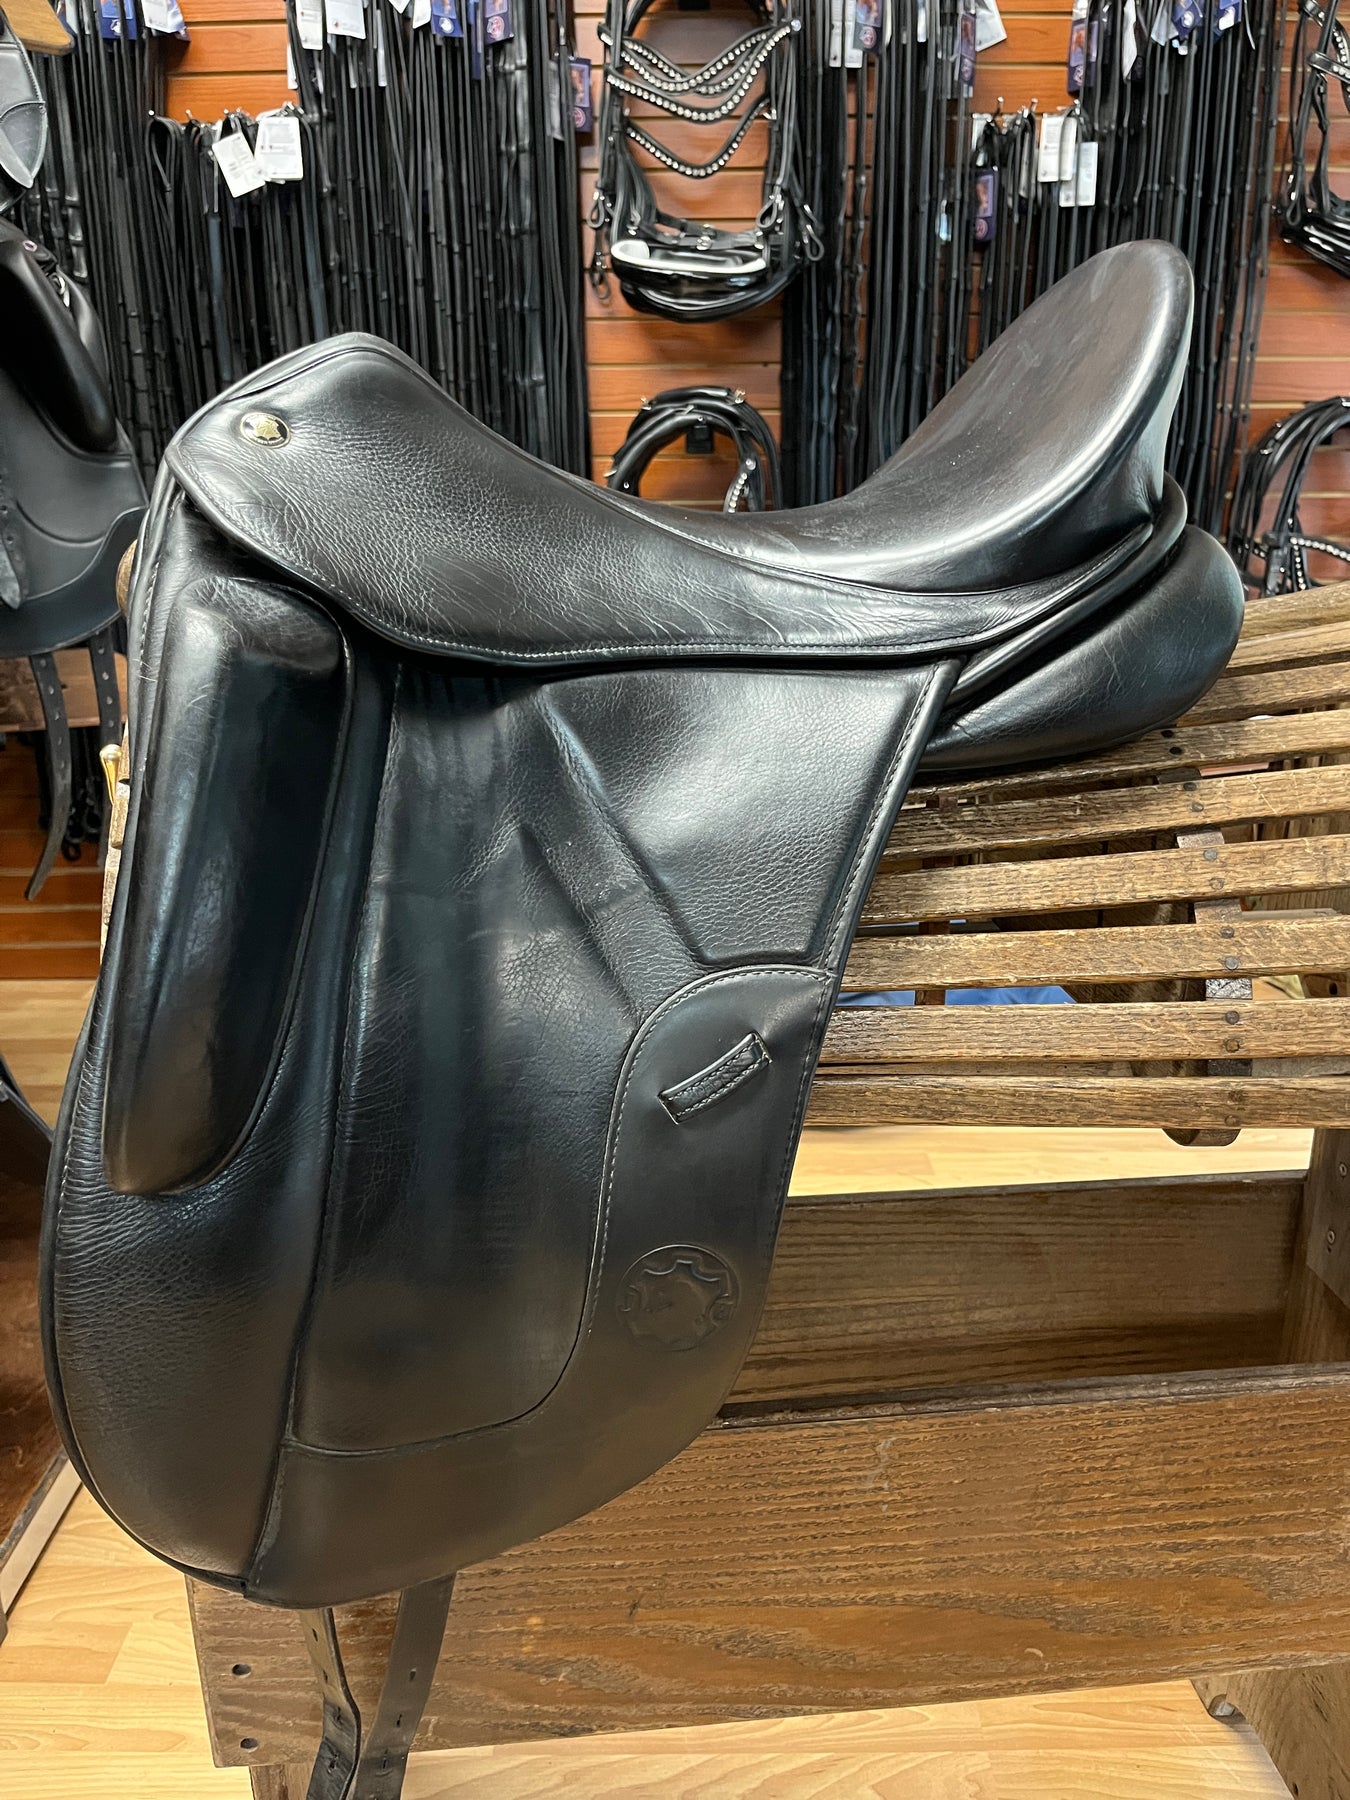 Used & Closeout Saddles